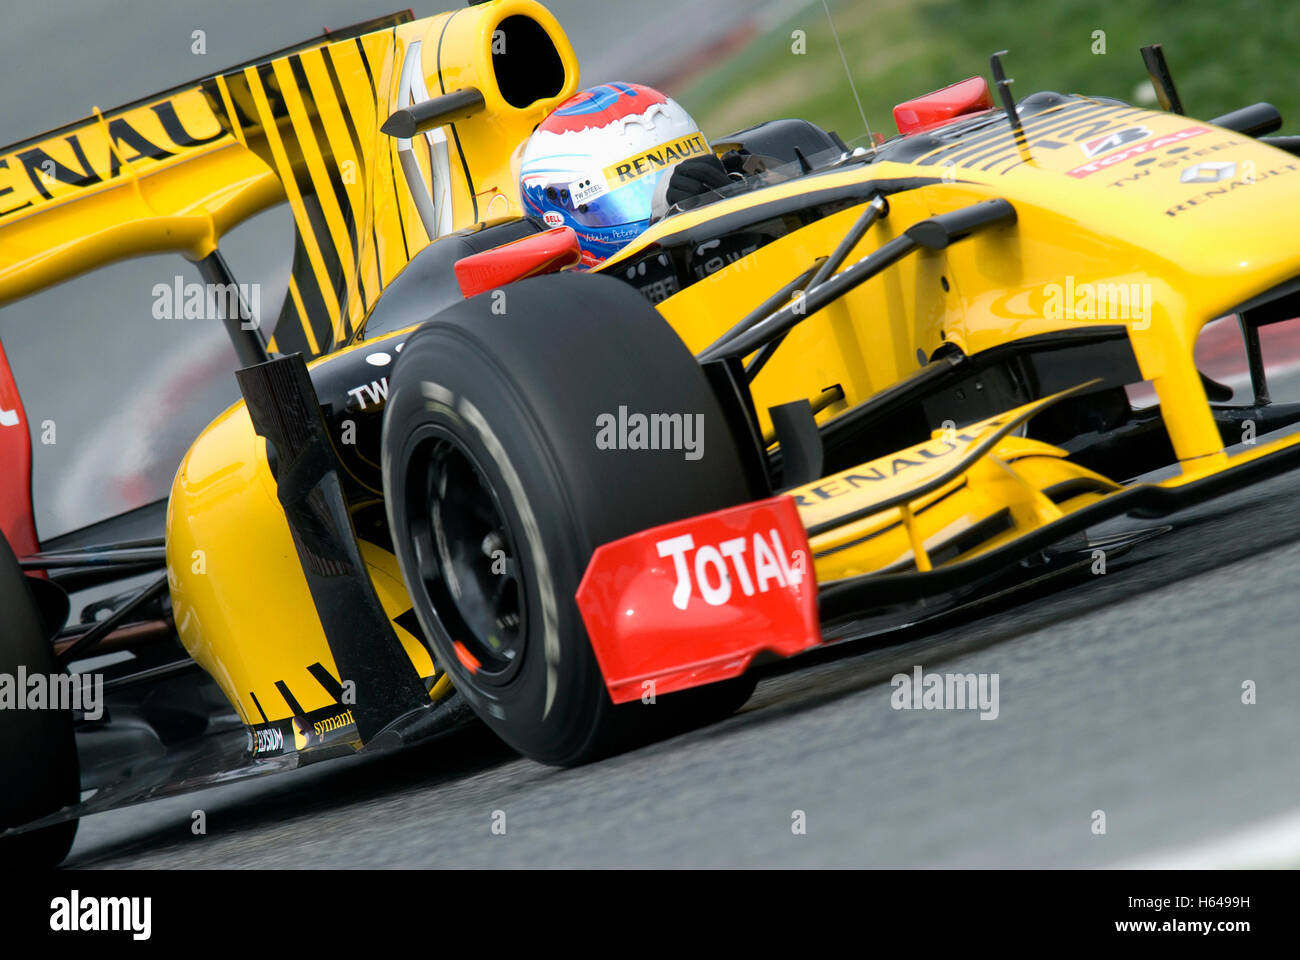 Motorsports, Vitaly Petrov, RUS, in Renault R30 race car, Formula 1 i test sul Circuito de Catalunya race track in Foto Stock